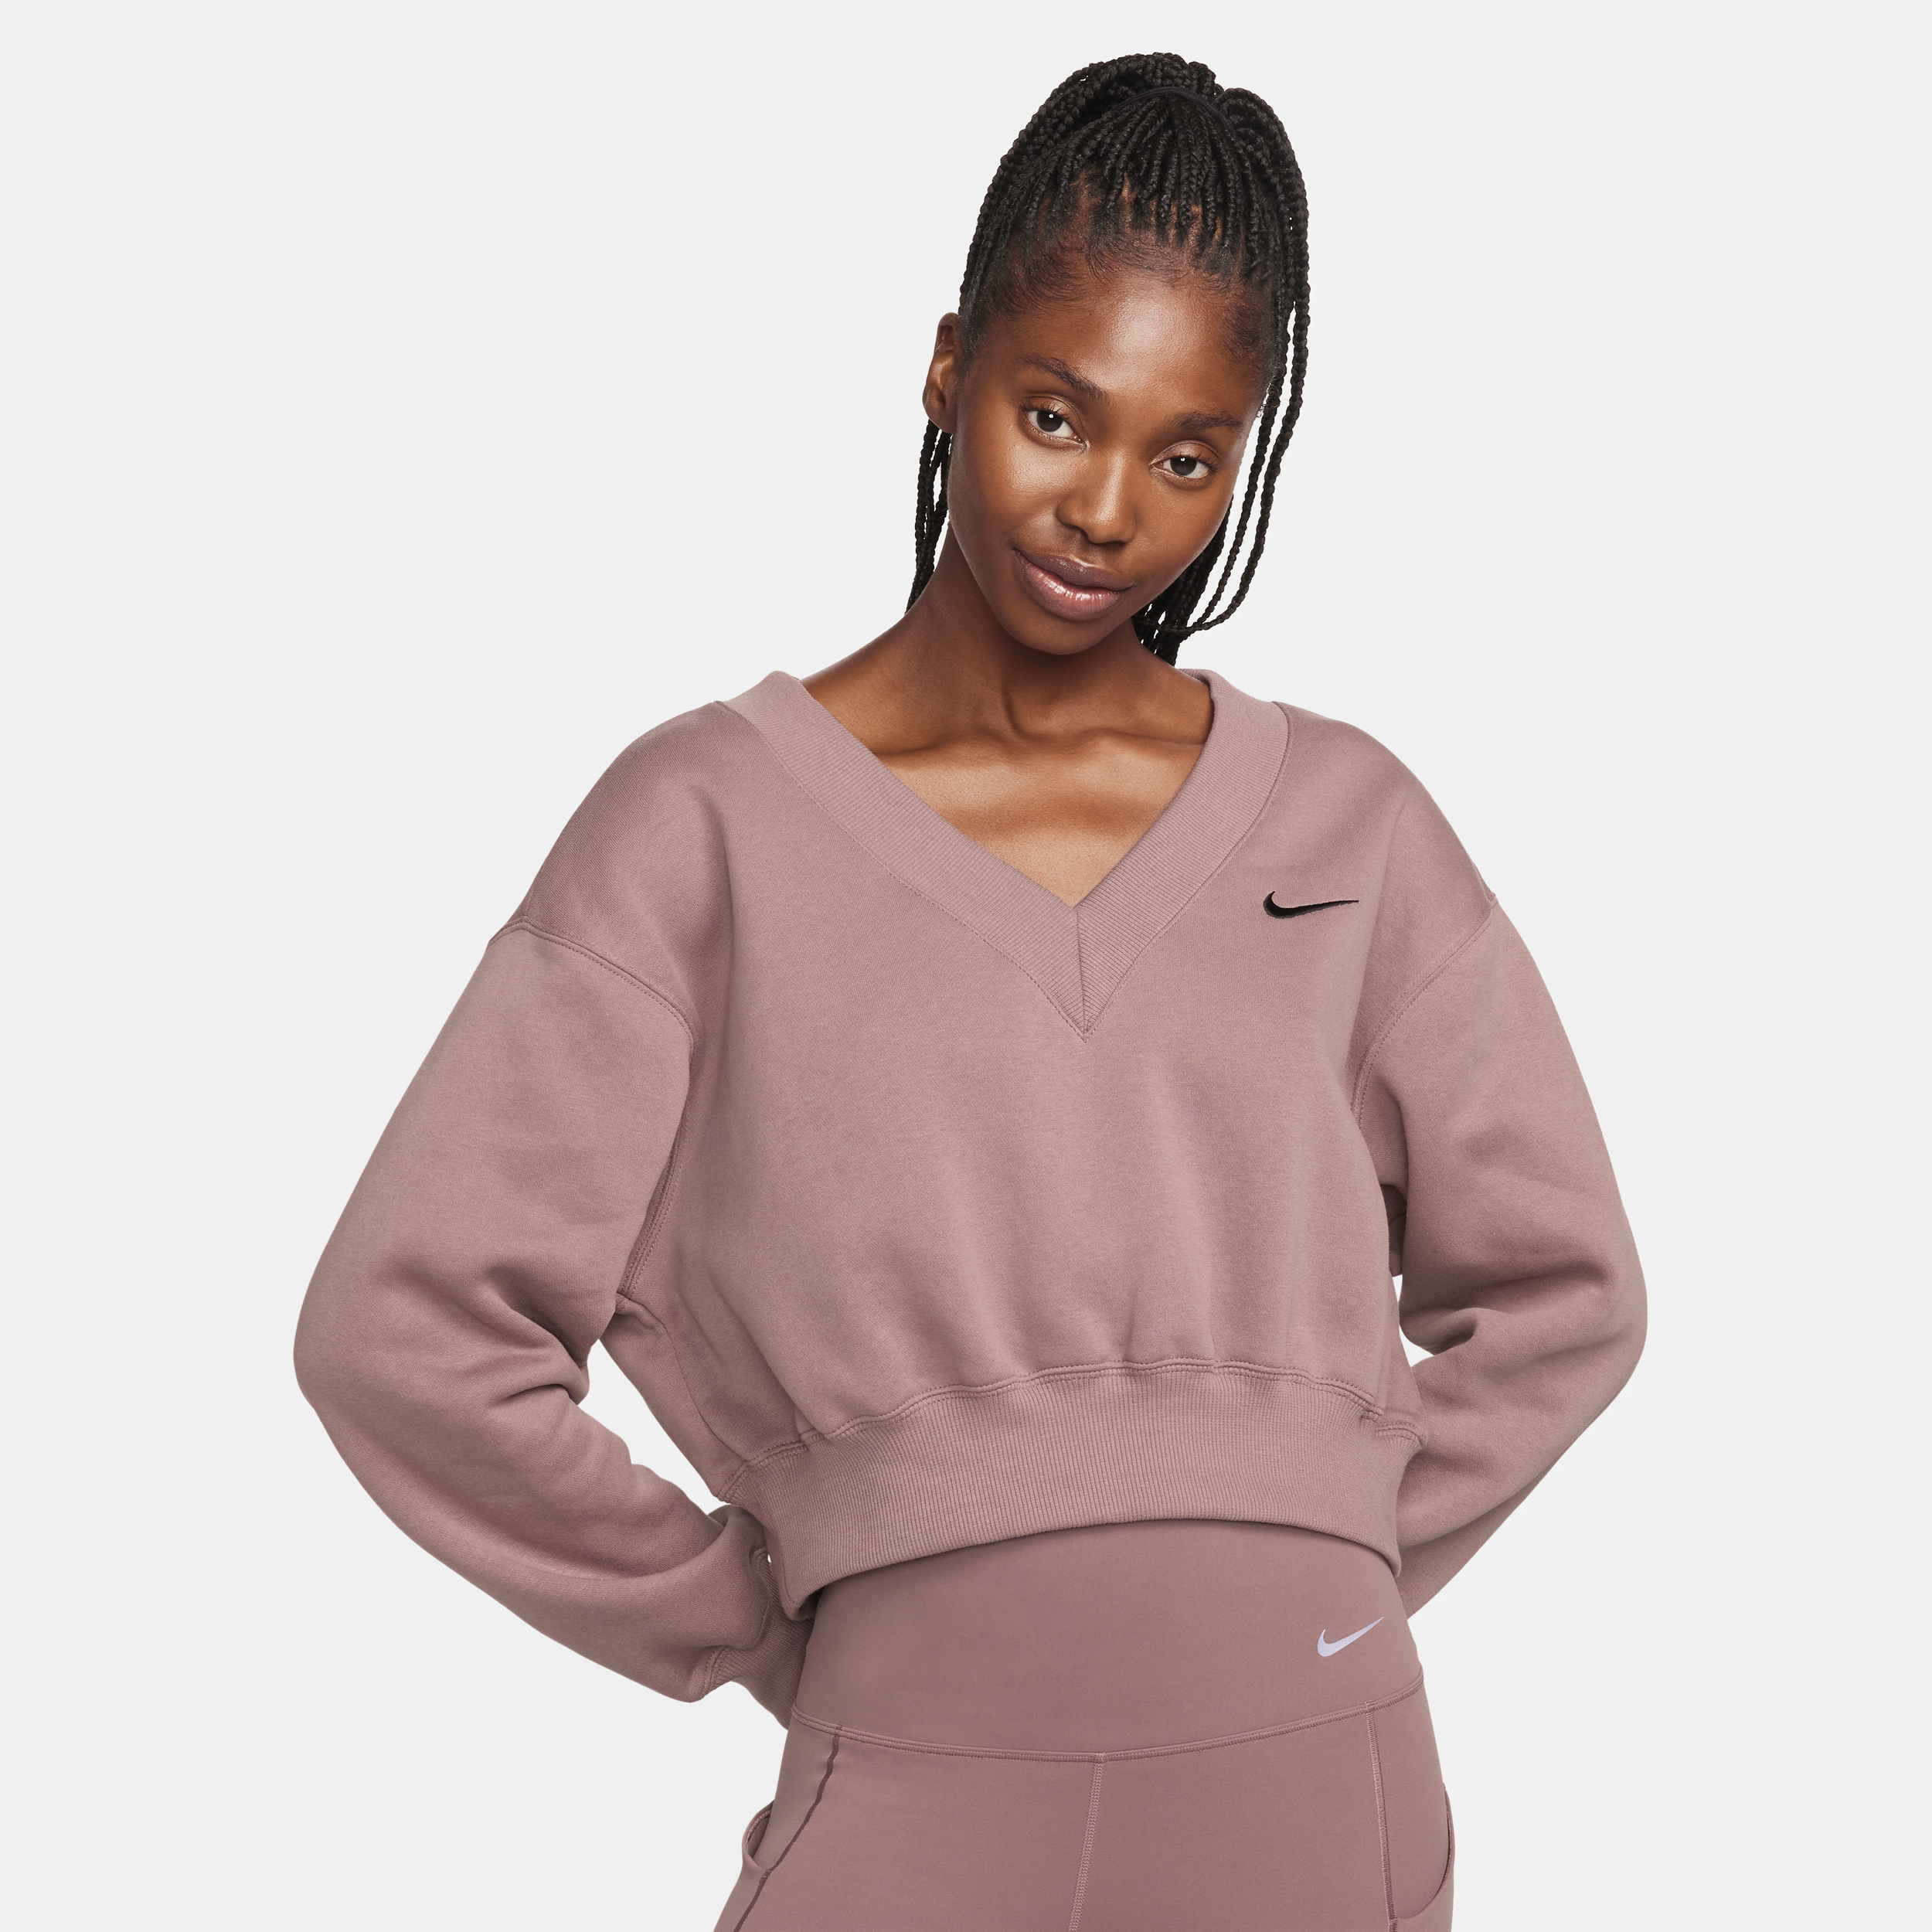 Kort Nike Sportswear Phoenix Fleece-top med V-hals til kvinder - lilla